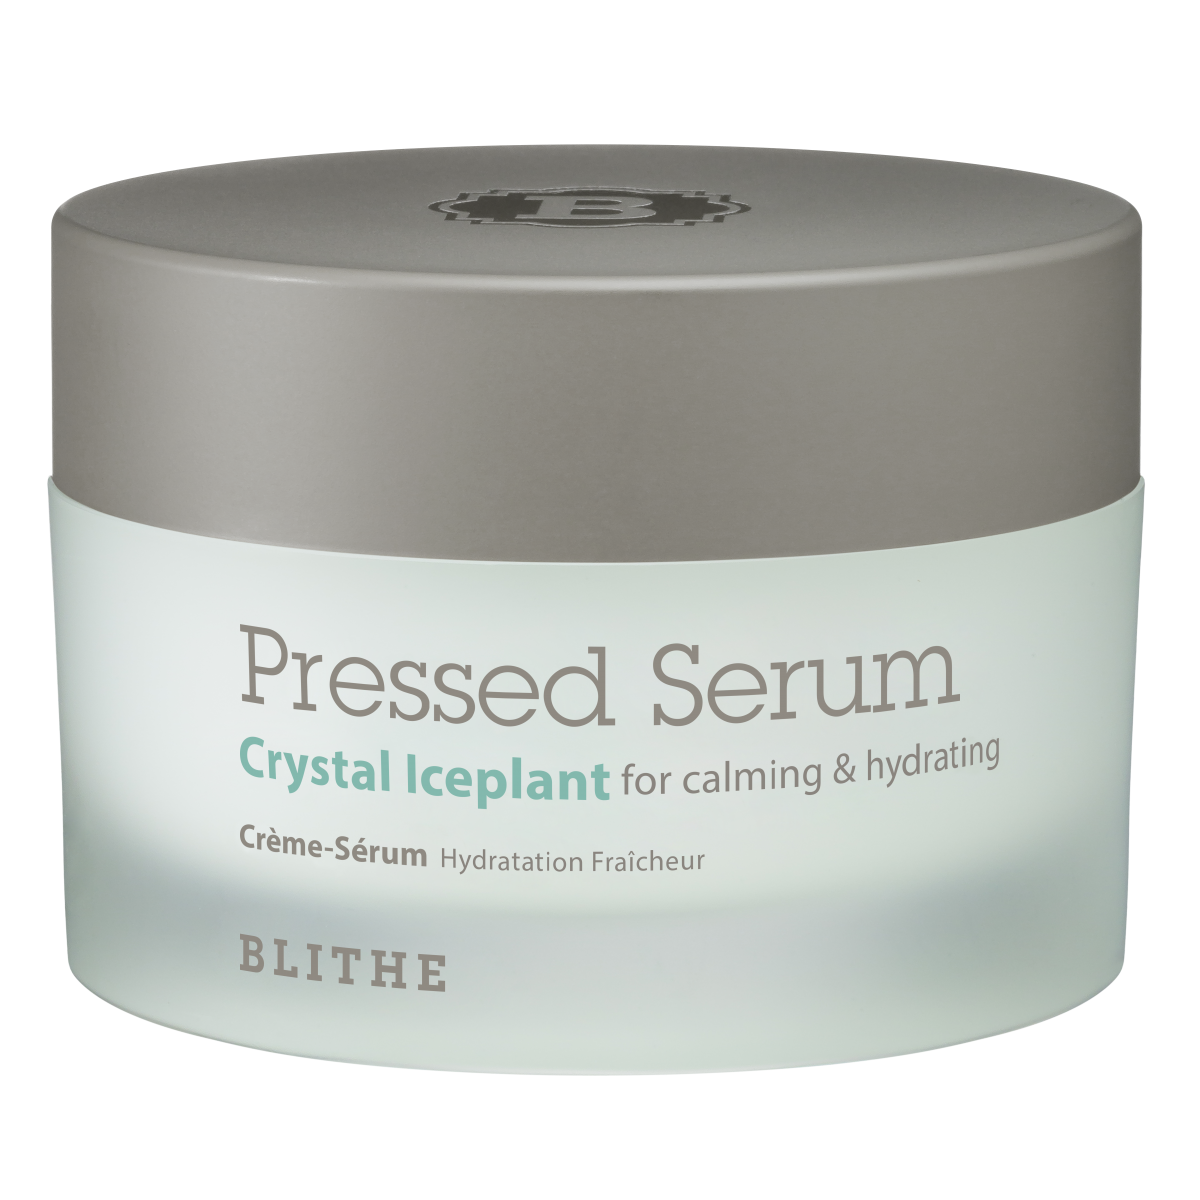 Сыворотка спрессованная увлажняющая – Blithe Crystal Iceplant pressed serum